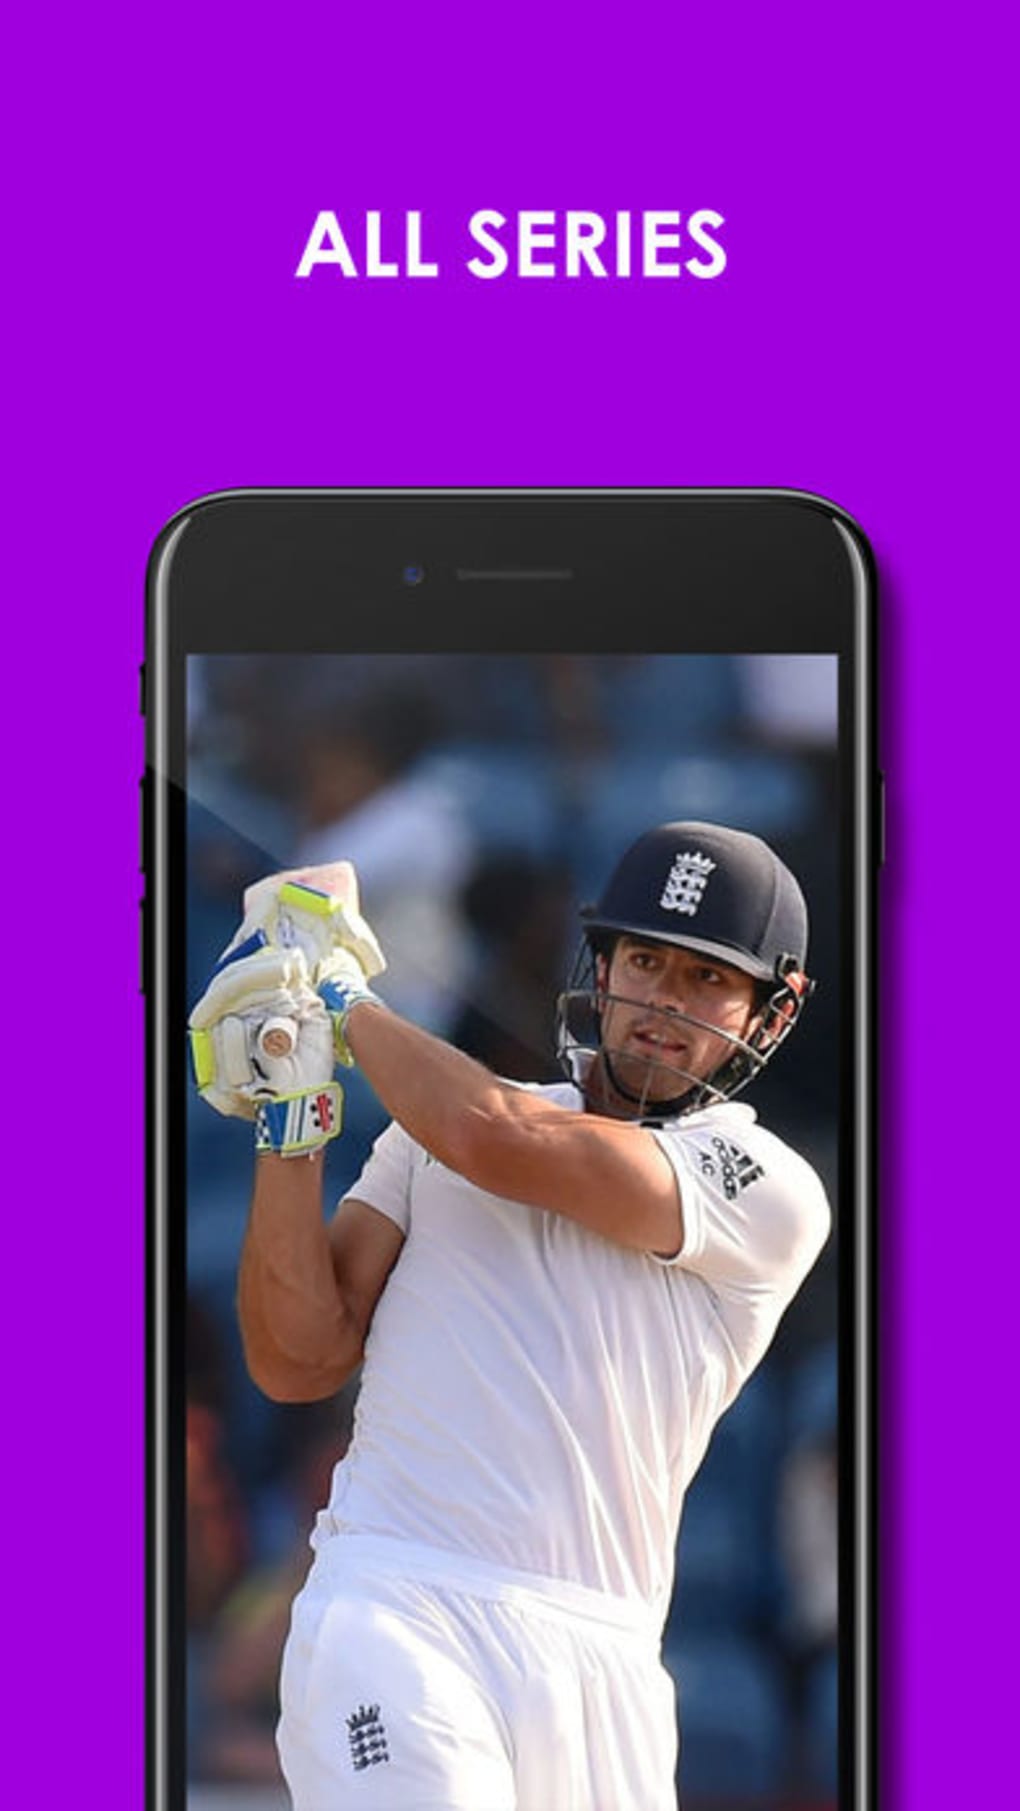 cricket live app download video